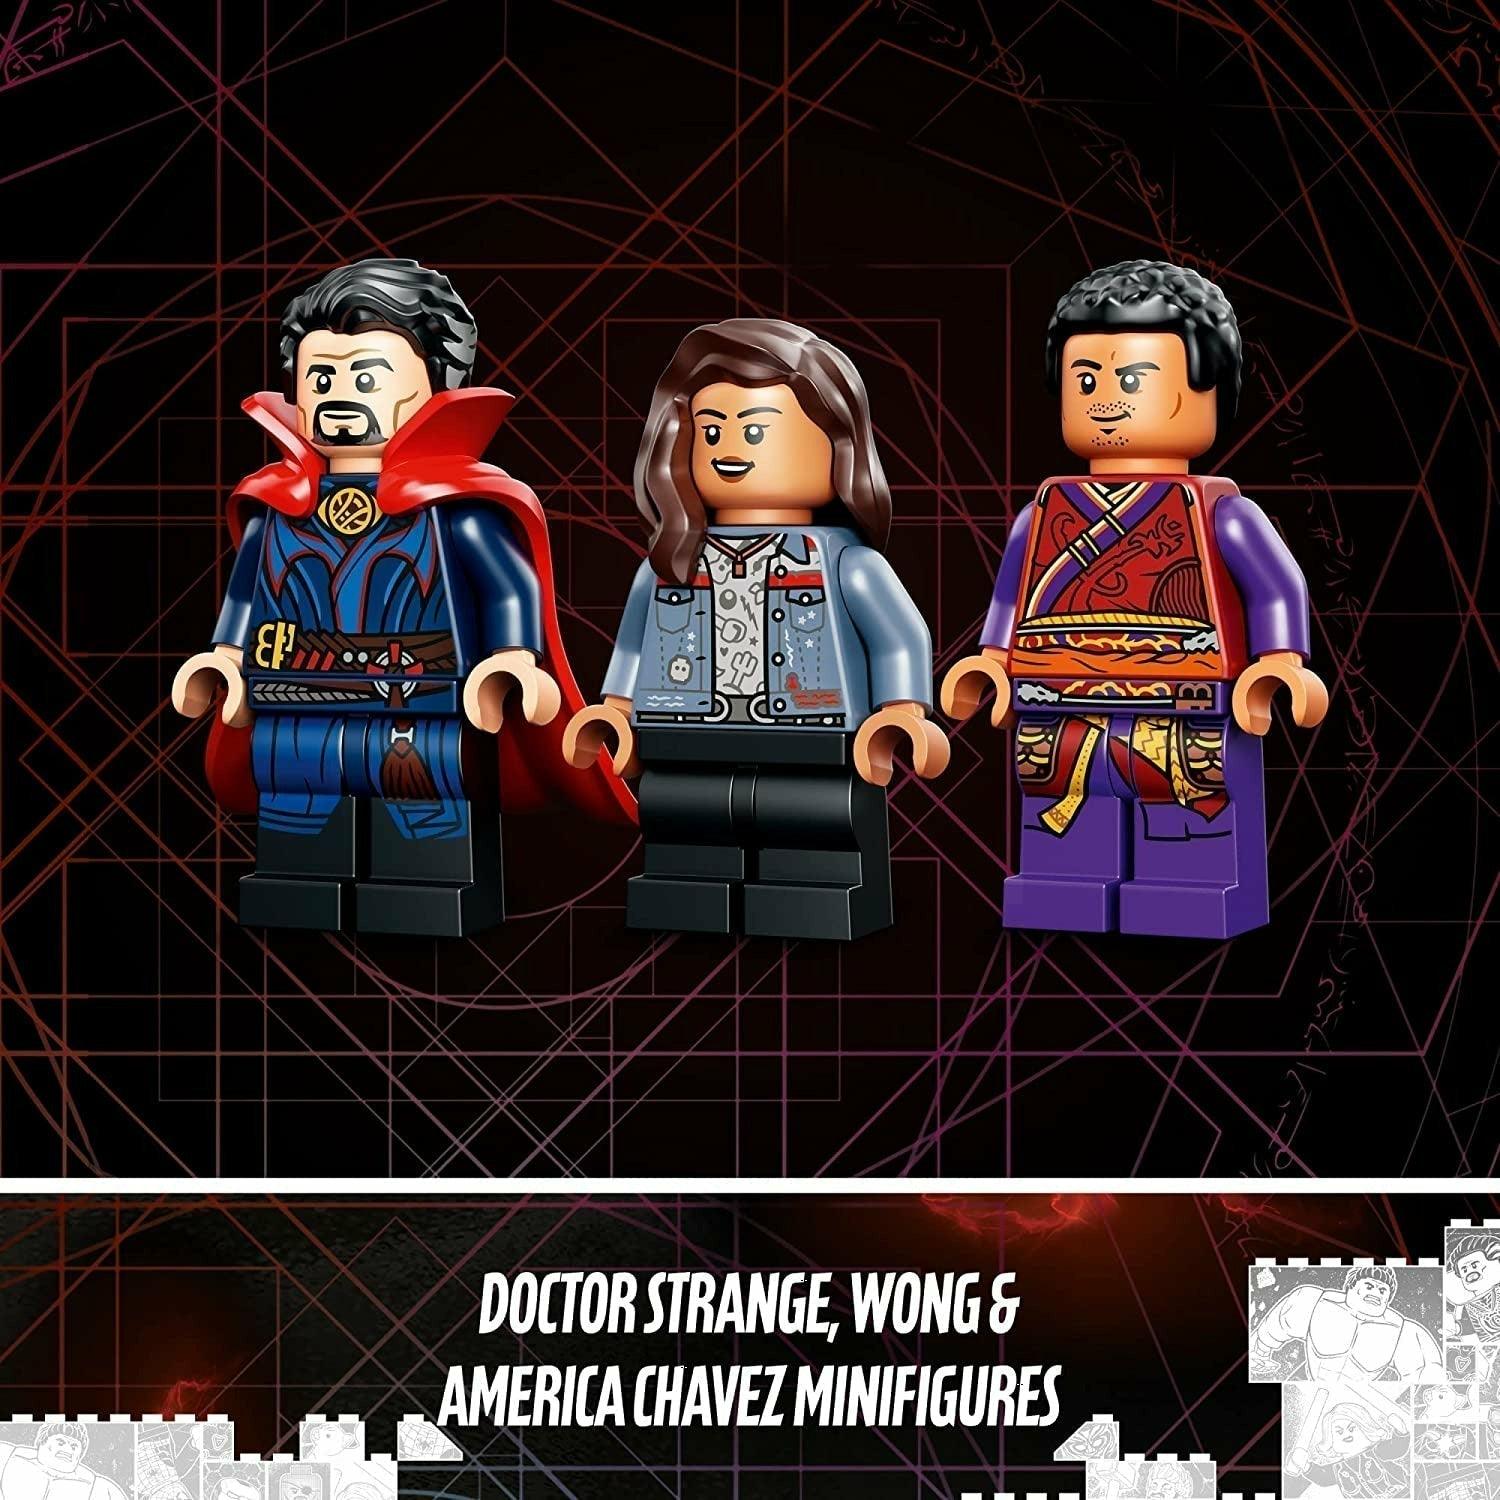 LEGO 76205 Marvel Gargantos Showdown Monster Building Kit with Doctor Strange, Wong & America Chavez 264 Pieces - BumbleToys - 14 Years & Up, 8+ Years, Boys, Dr. Strange, LEGO, Marvel, OXE, Pre-Order